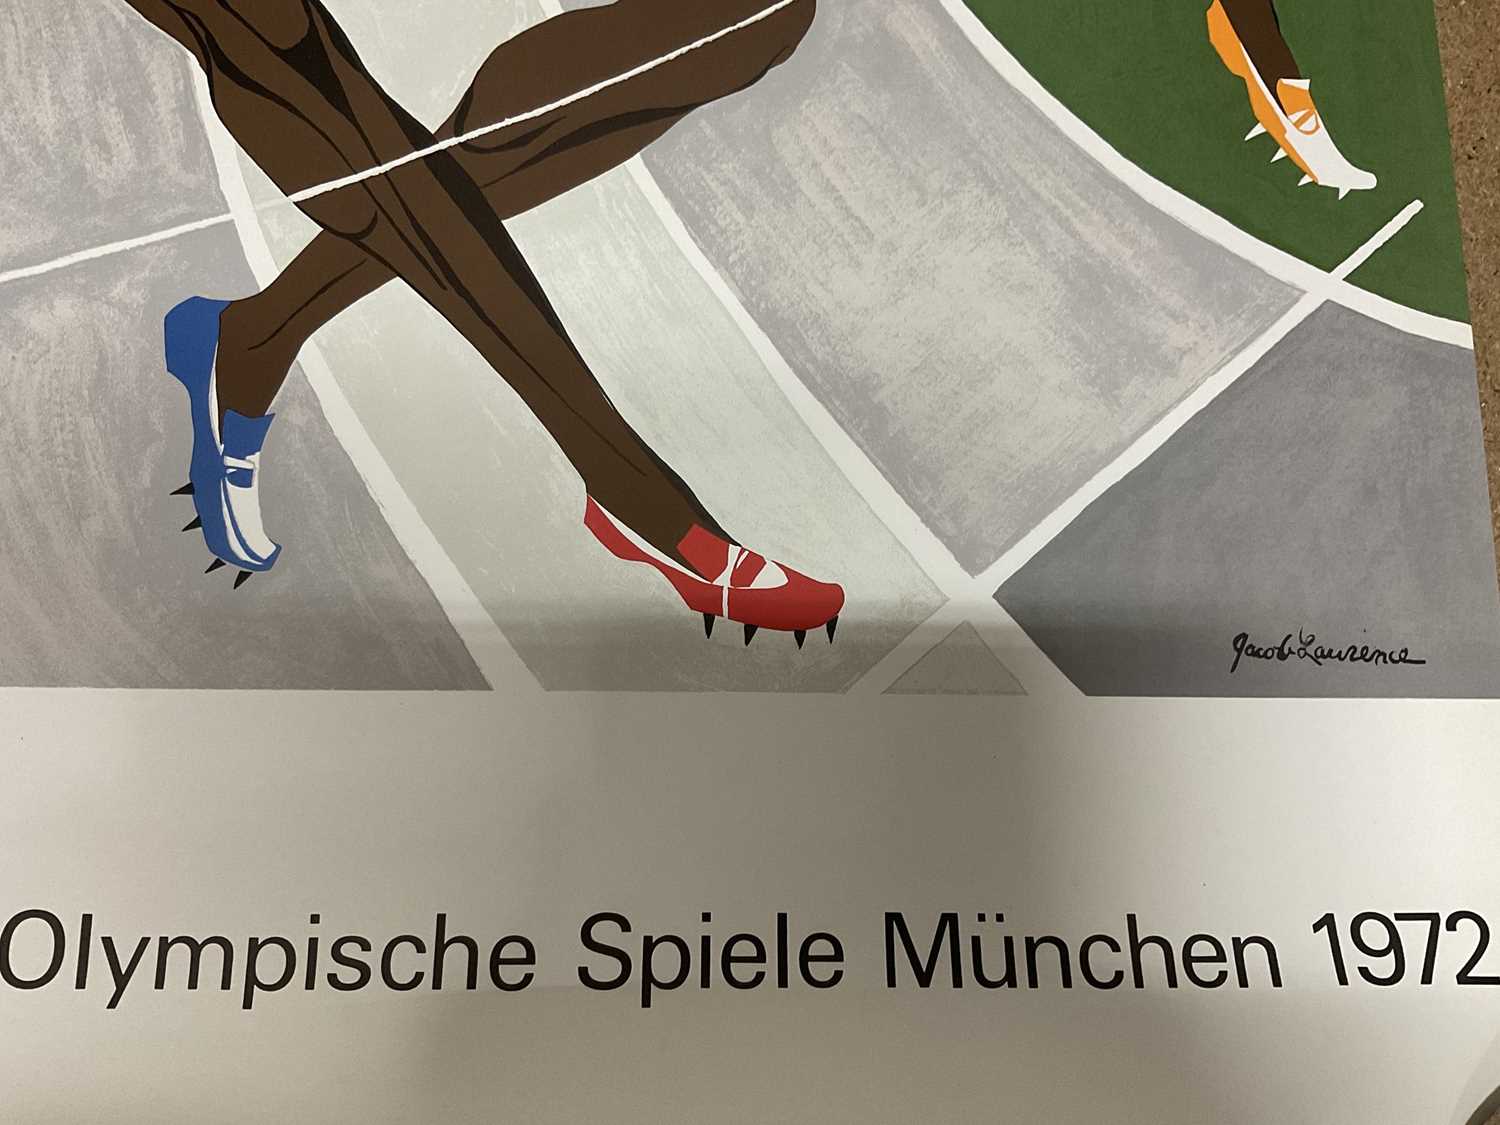 Jacob Lawrence - original 1972 Munich Olympics poster - Image 2 of 3